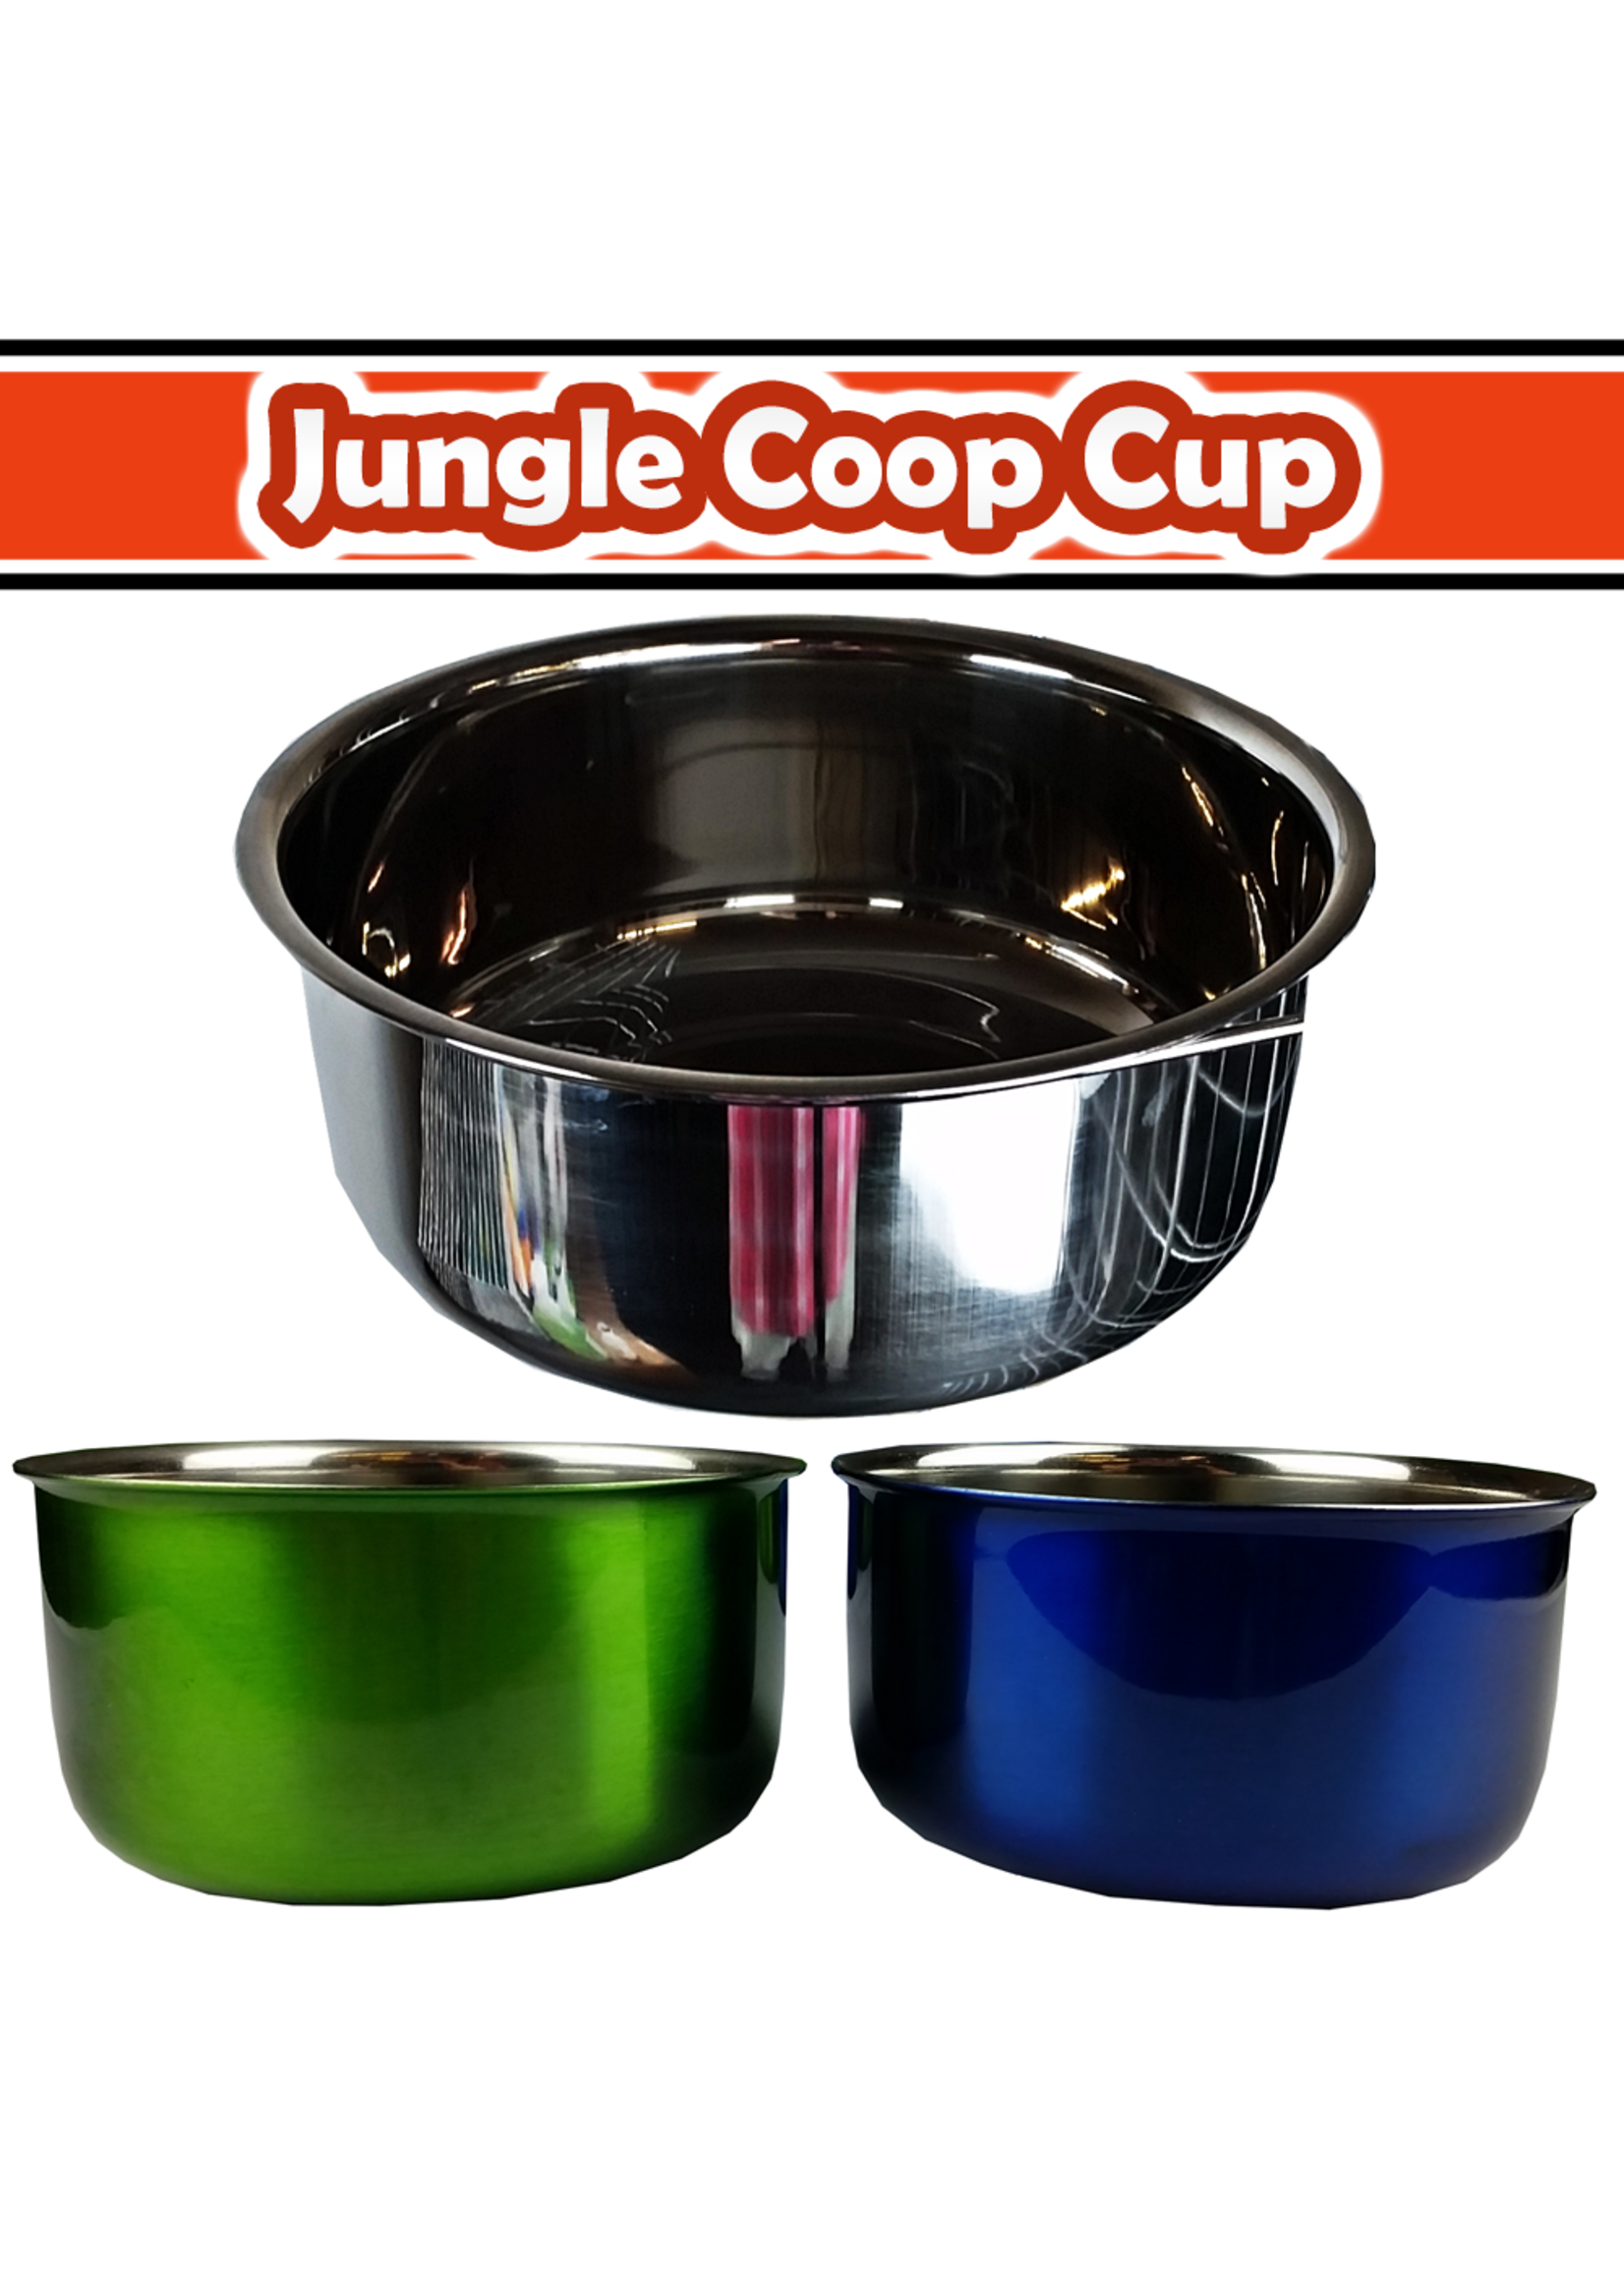 A&E Jungle Cups Bolt On Coop Cup 10 oz